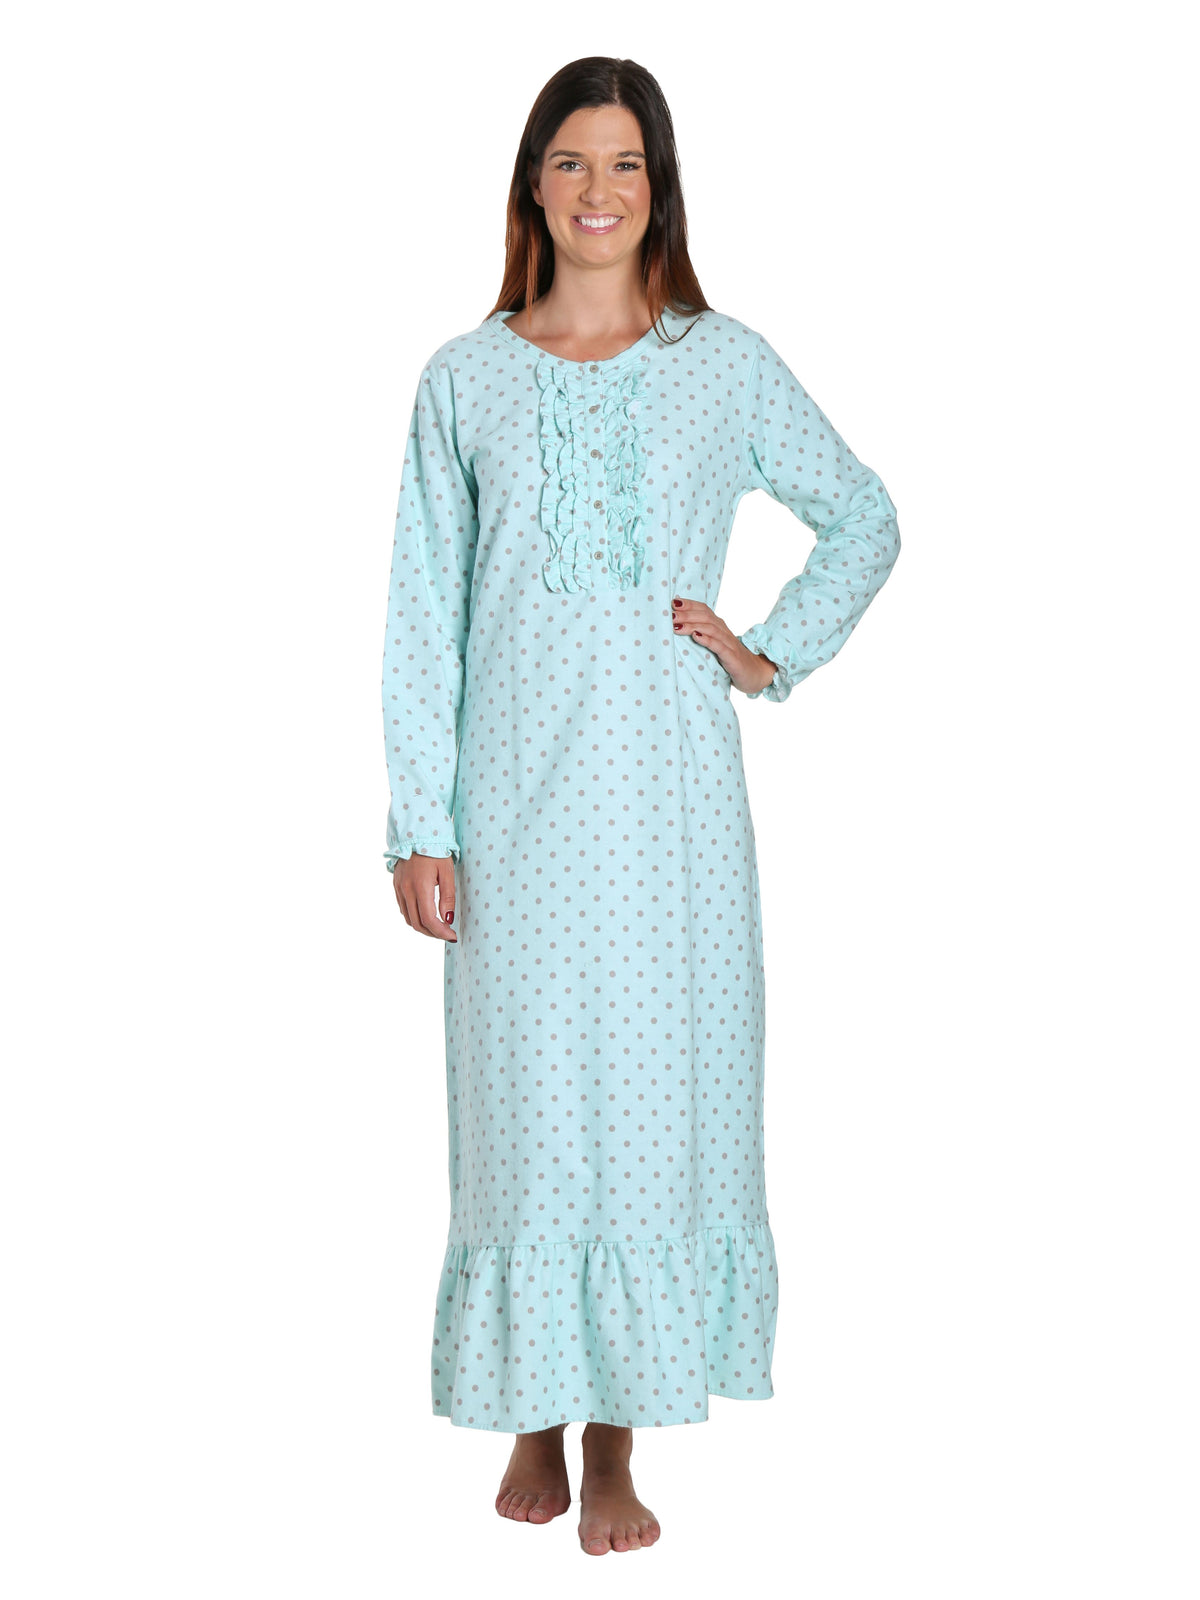 Women's Premium Flannel Long Gown - Dots Diva Aqua-Gray